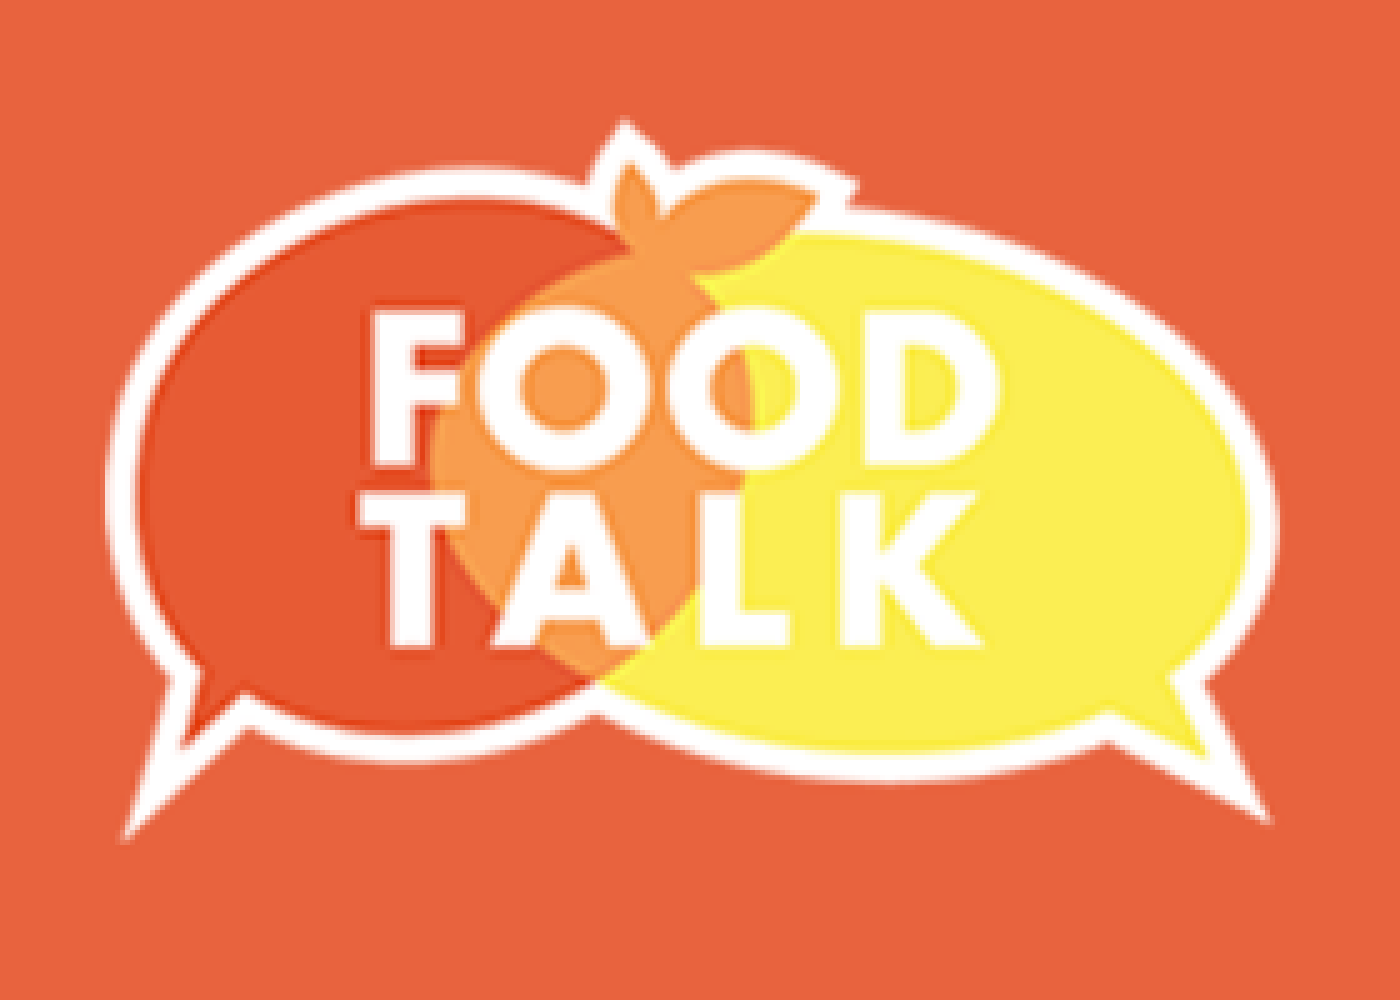 Food Talk orange background